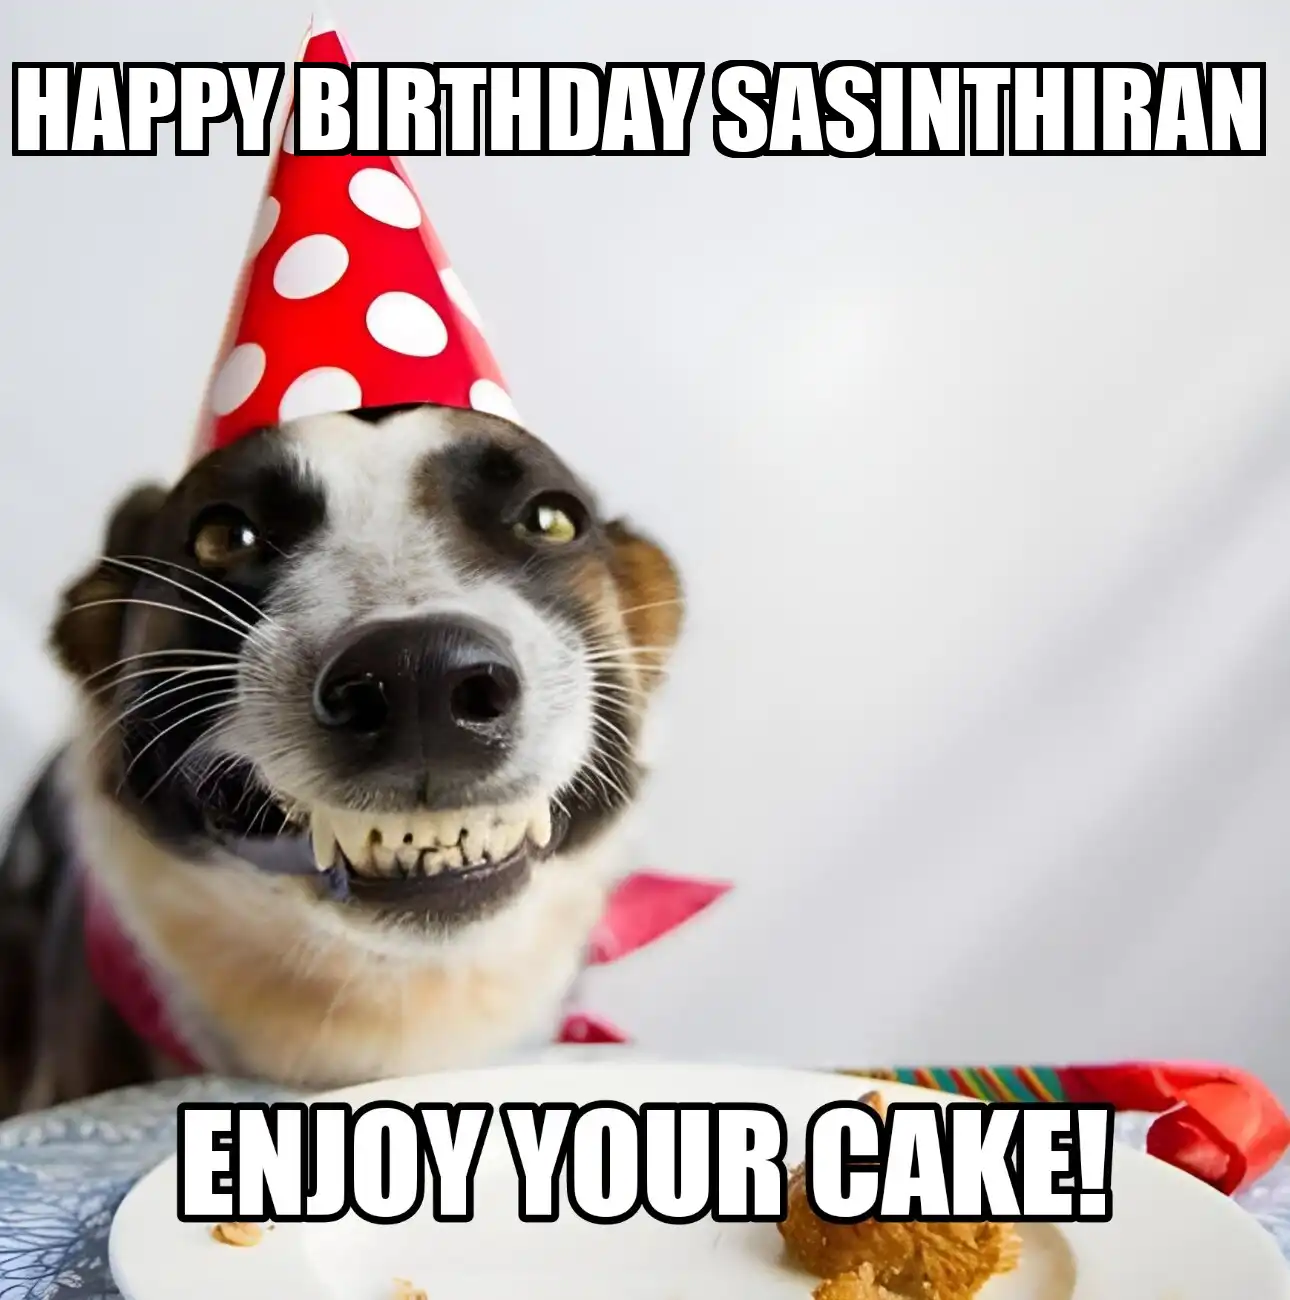 Happy Birthday Sasinthiran Enjoy Your Cake Dog Meme